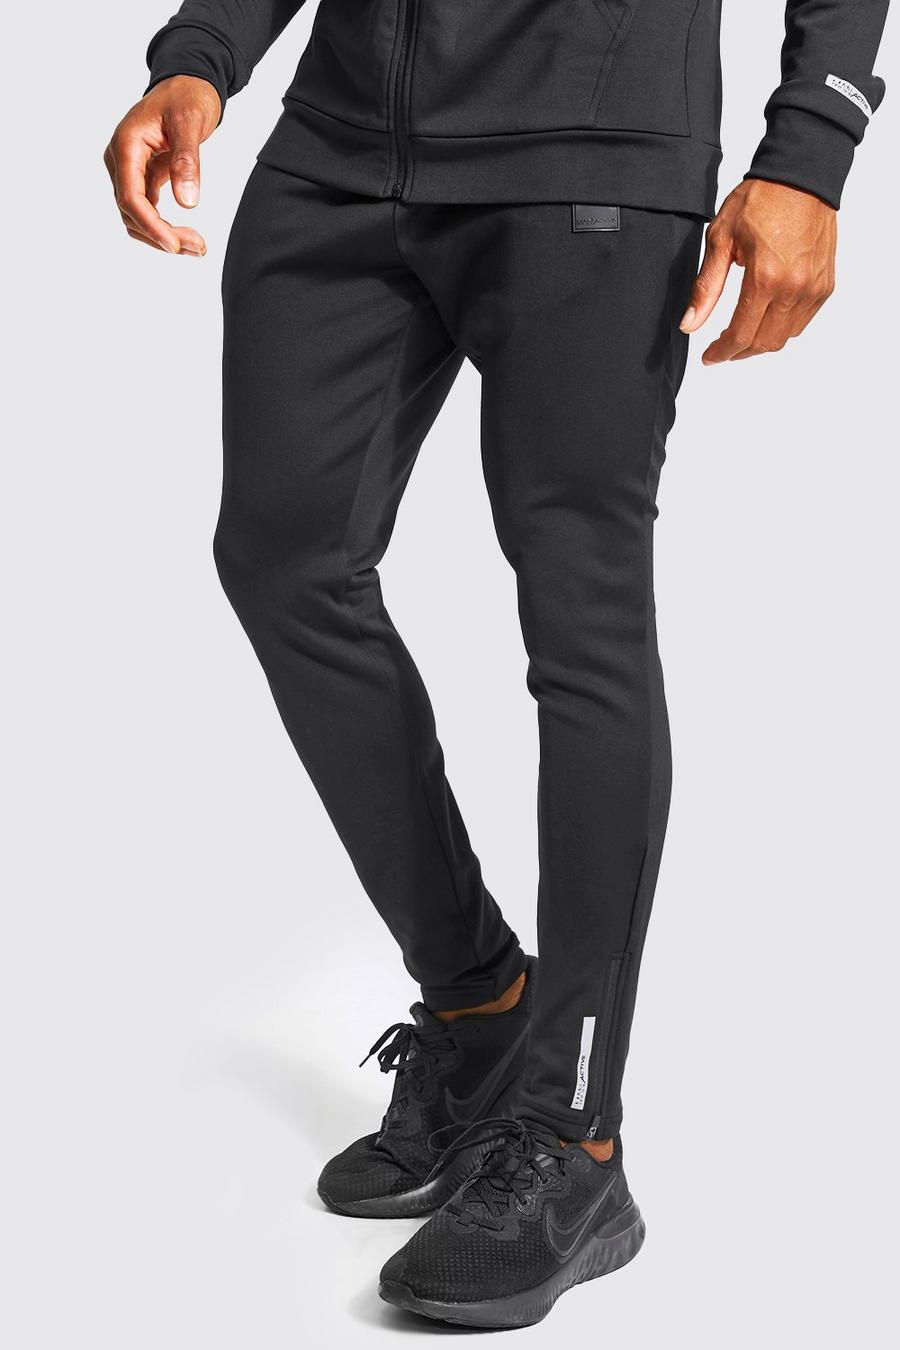 Pantalón deportivo MAN Active resistente, Black negro image number 1